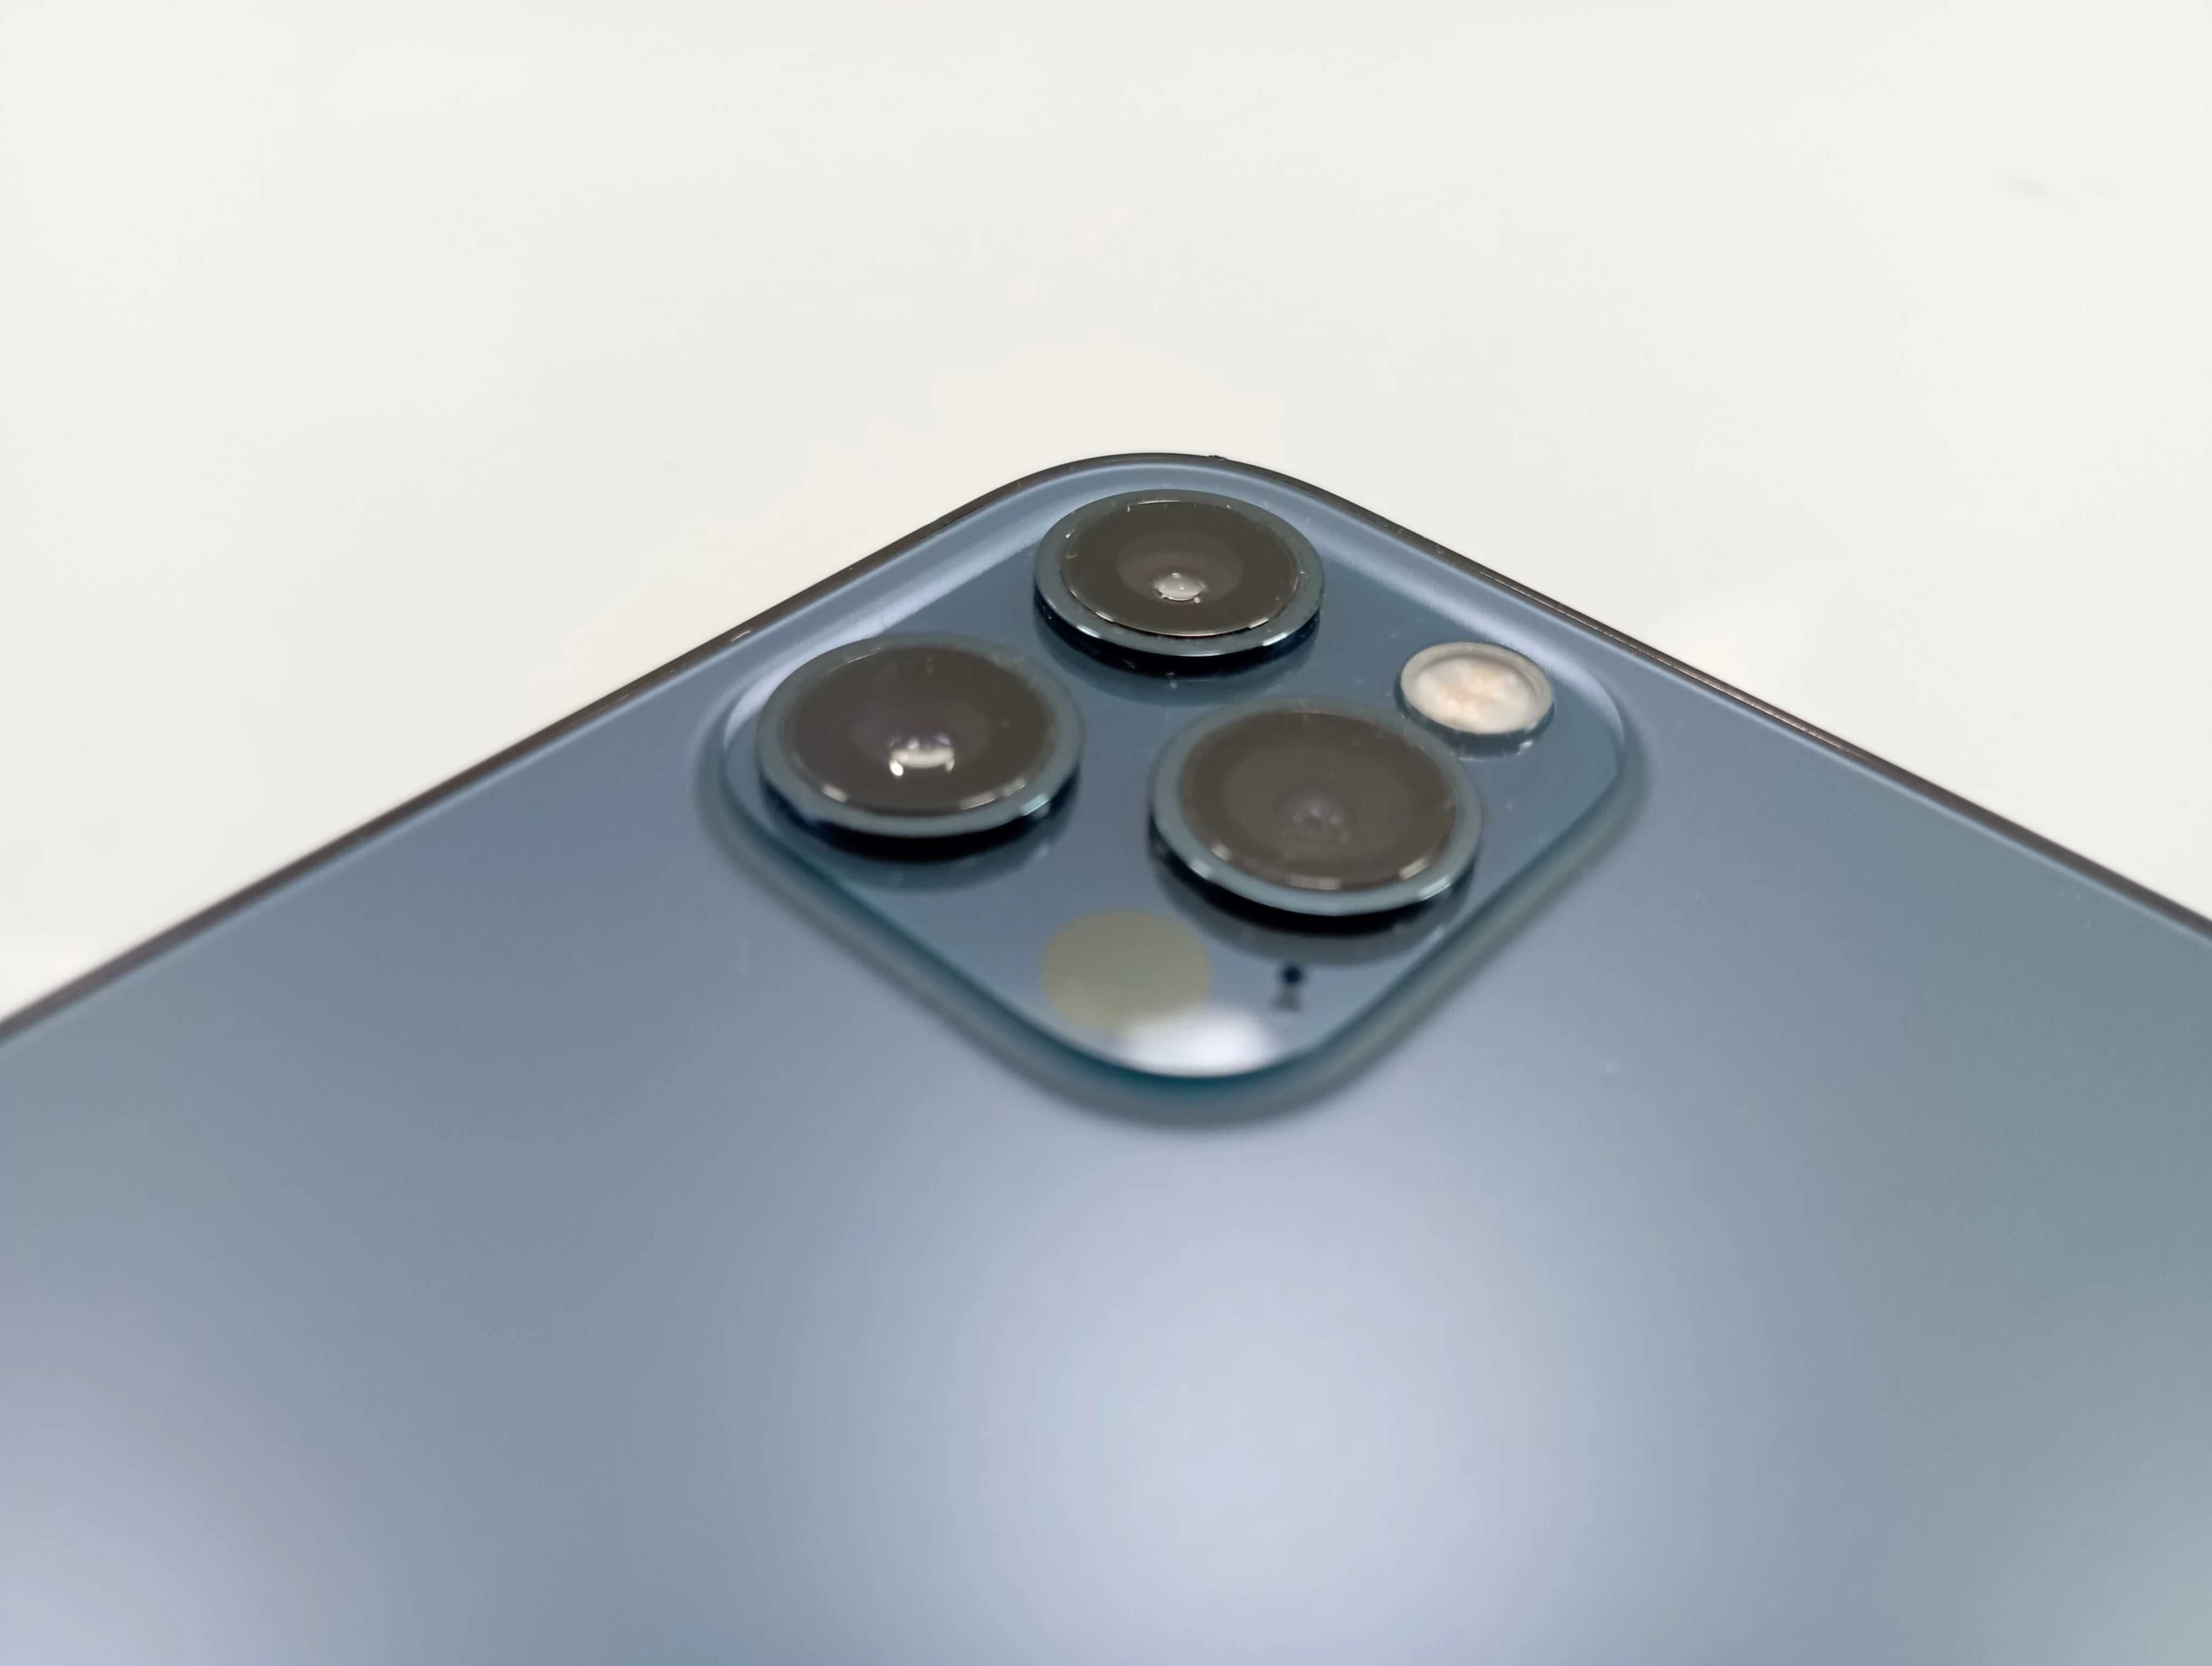 Smartfon Apple iPhone 12 Pro 6 GB / 128 GB Pacific Blue #OPIS